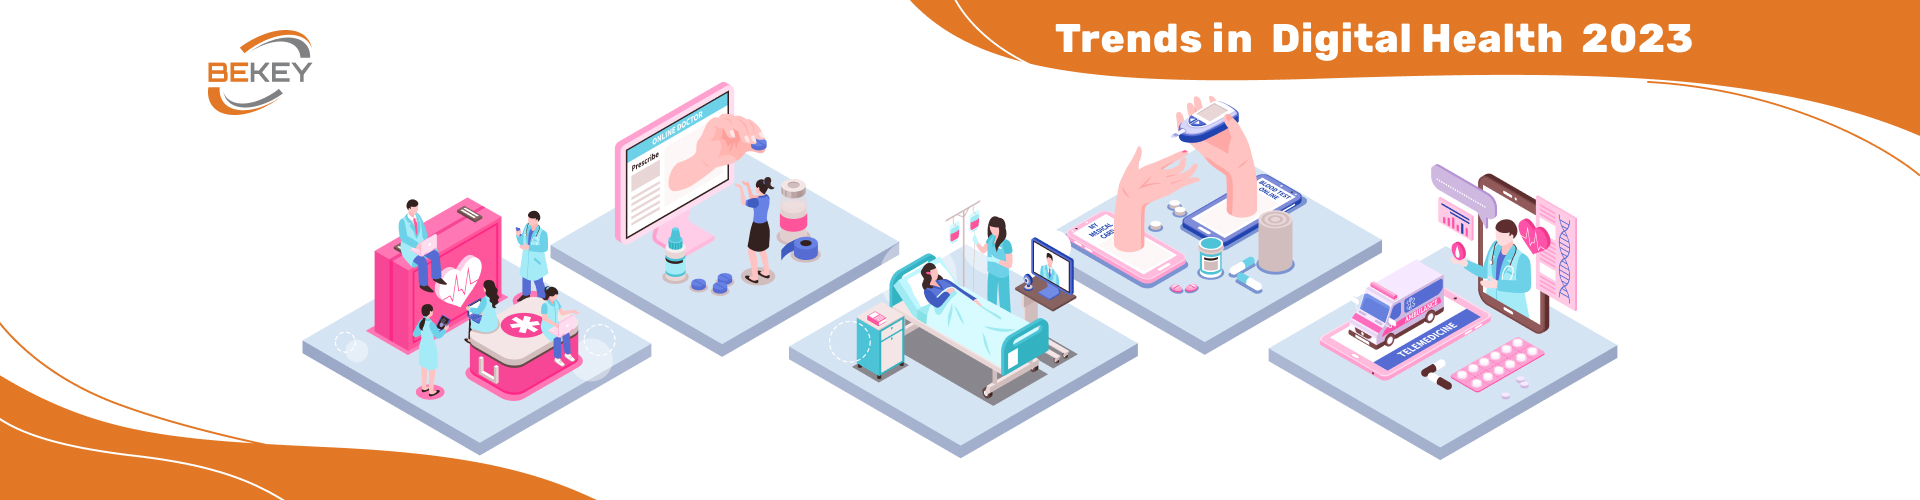 Digital Health Trends for 2023 - image